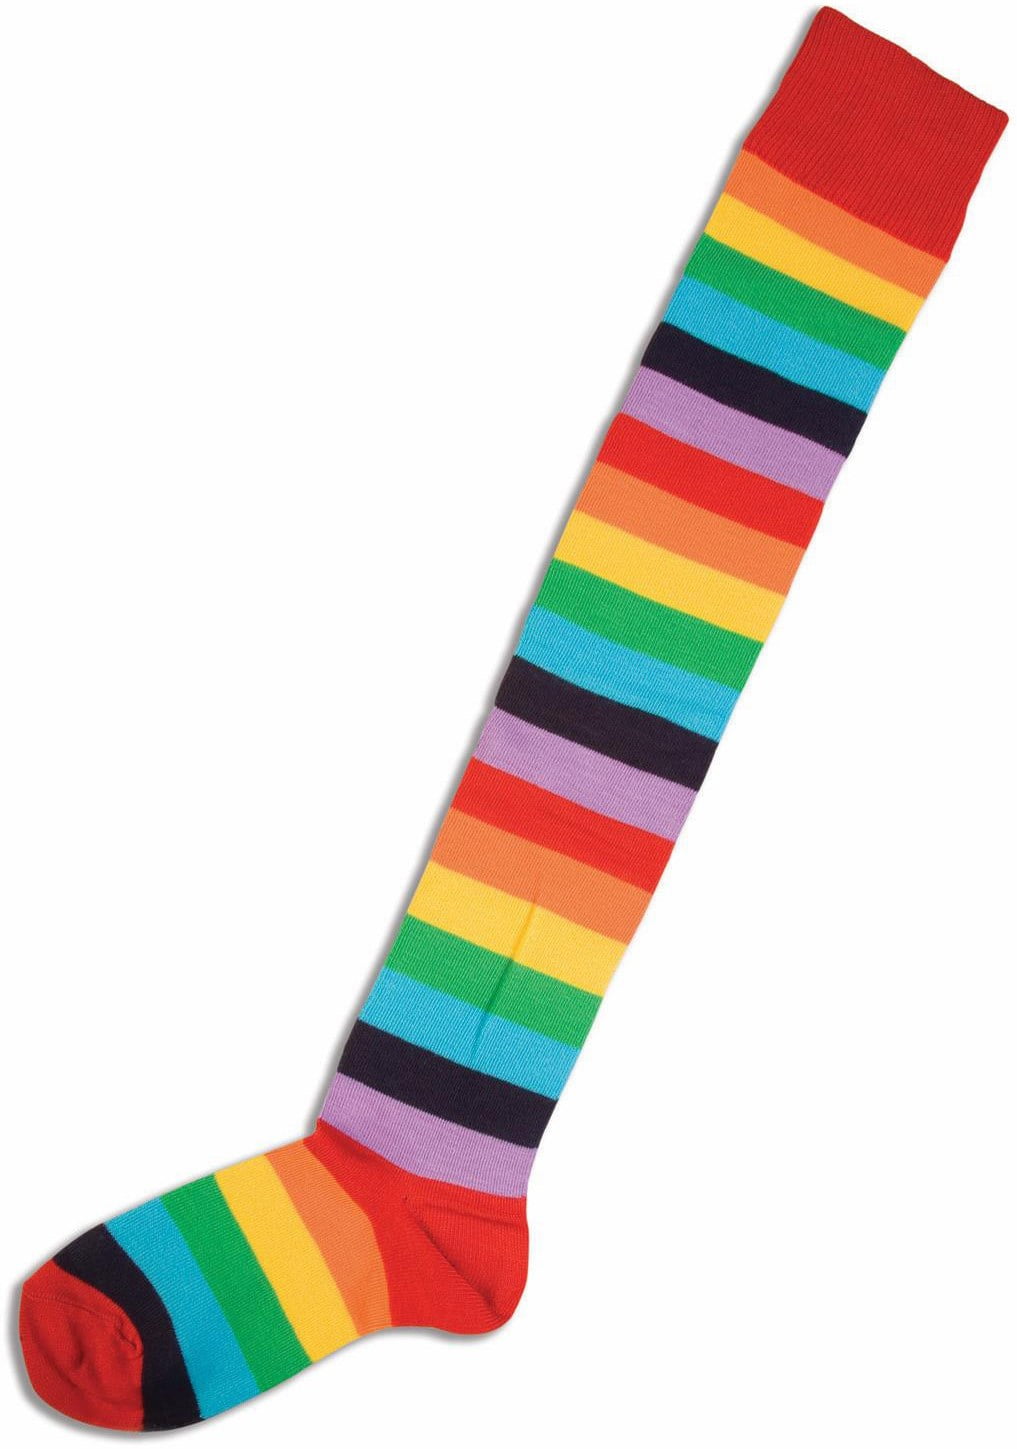 Clown Socks Stockings Bozo Mens Womens Rainbow Striped Adult Costume Accessory 